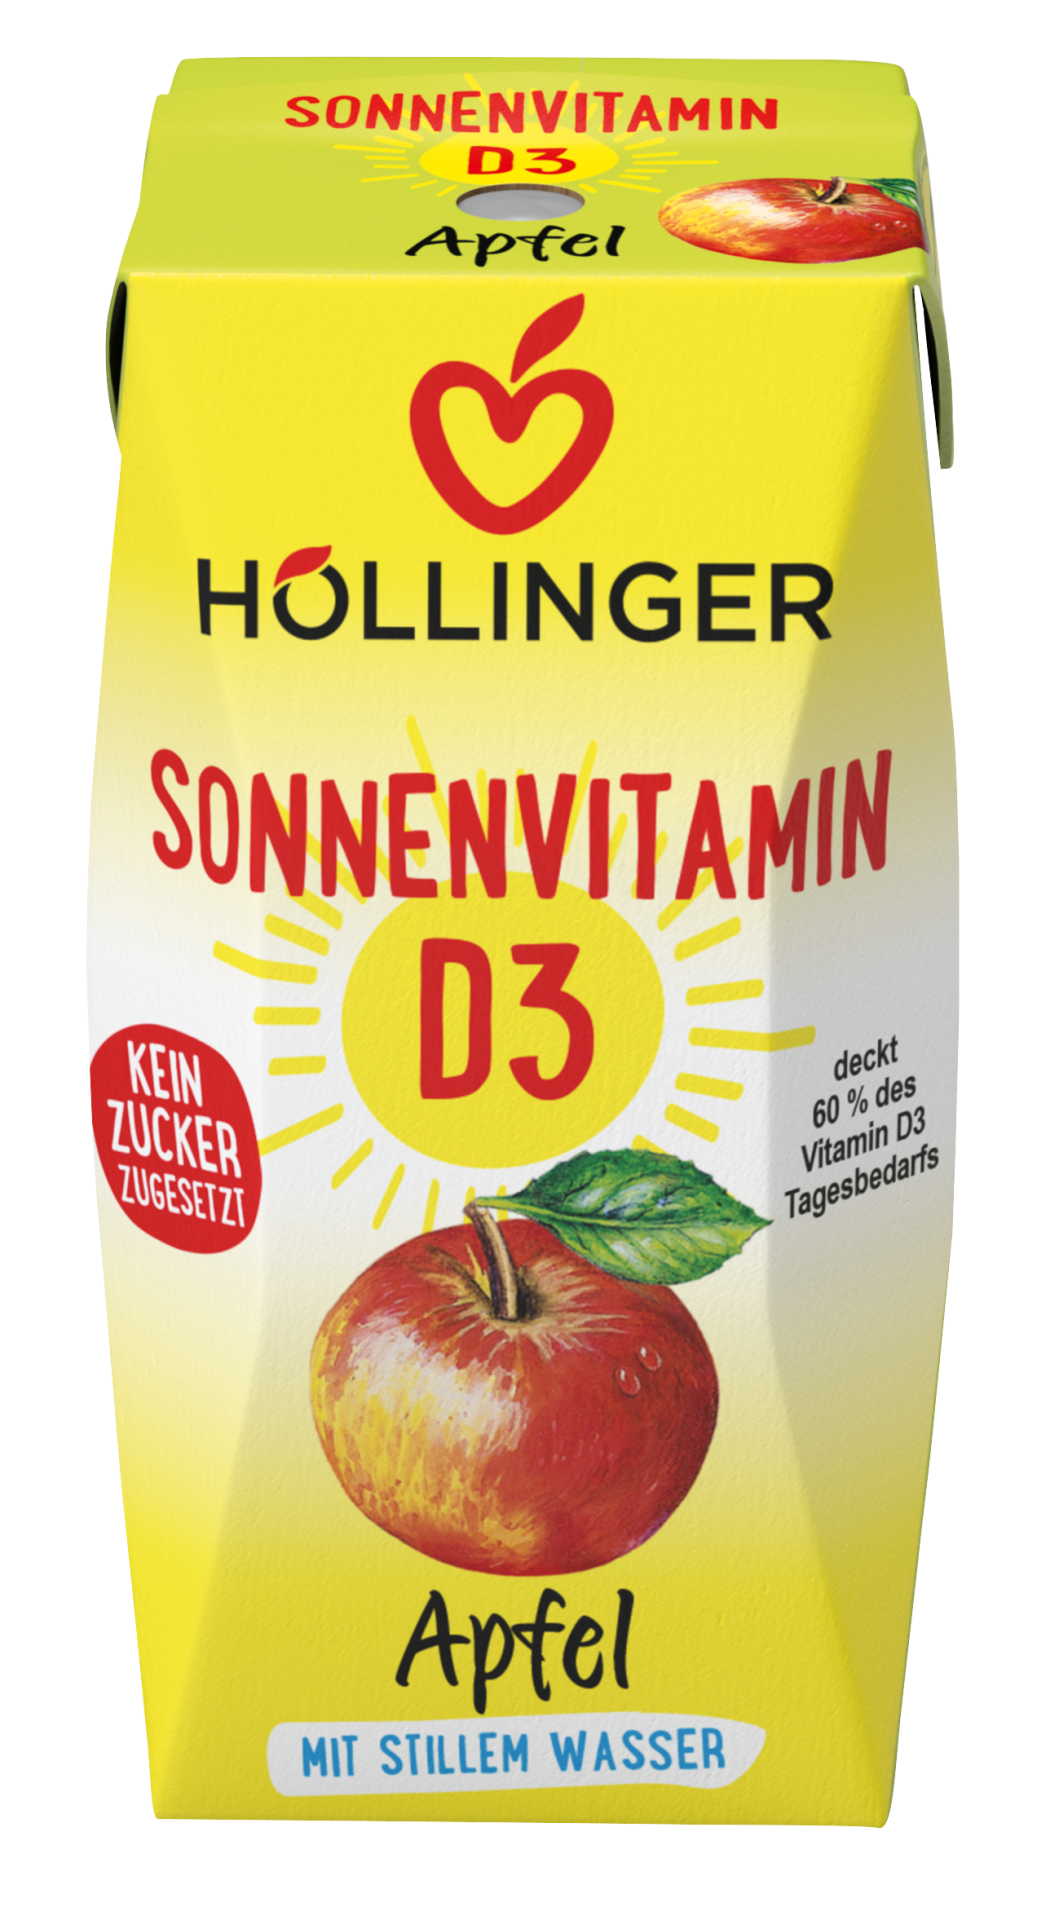 Höllinger Bio Sonnenvitamin D3 Apfel Schulsaft in der 200ml Packung